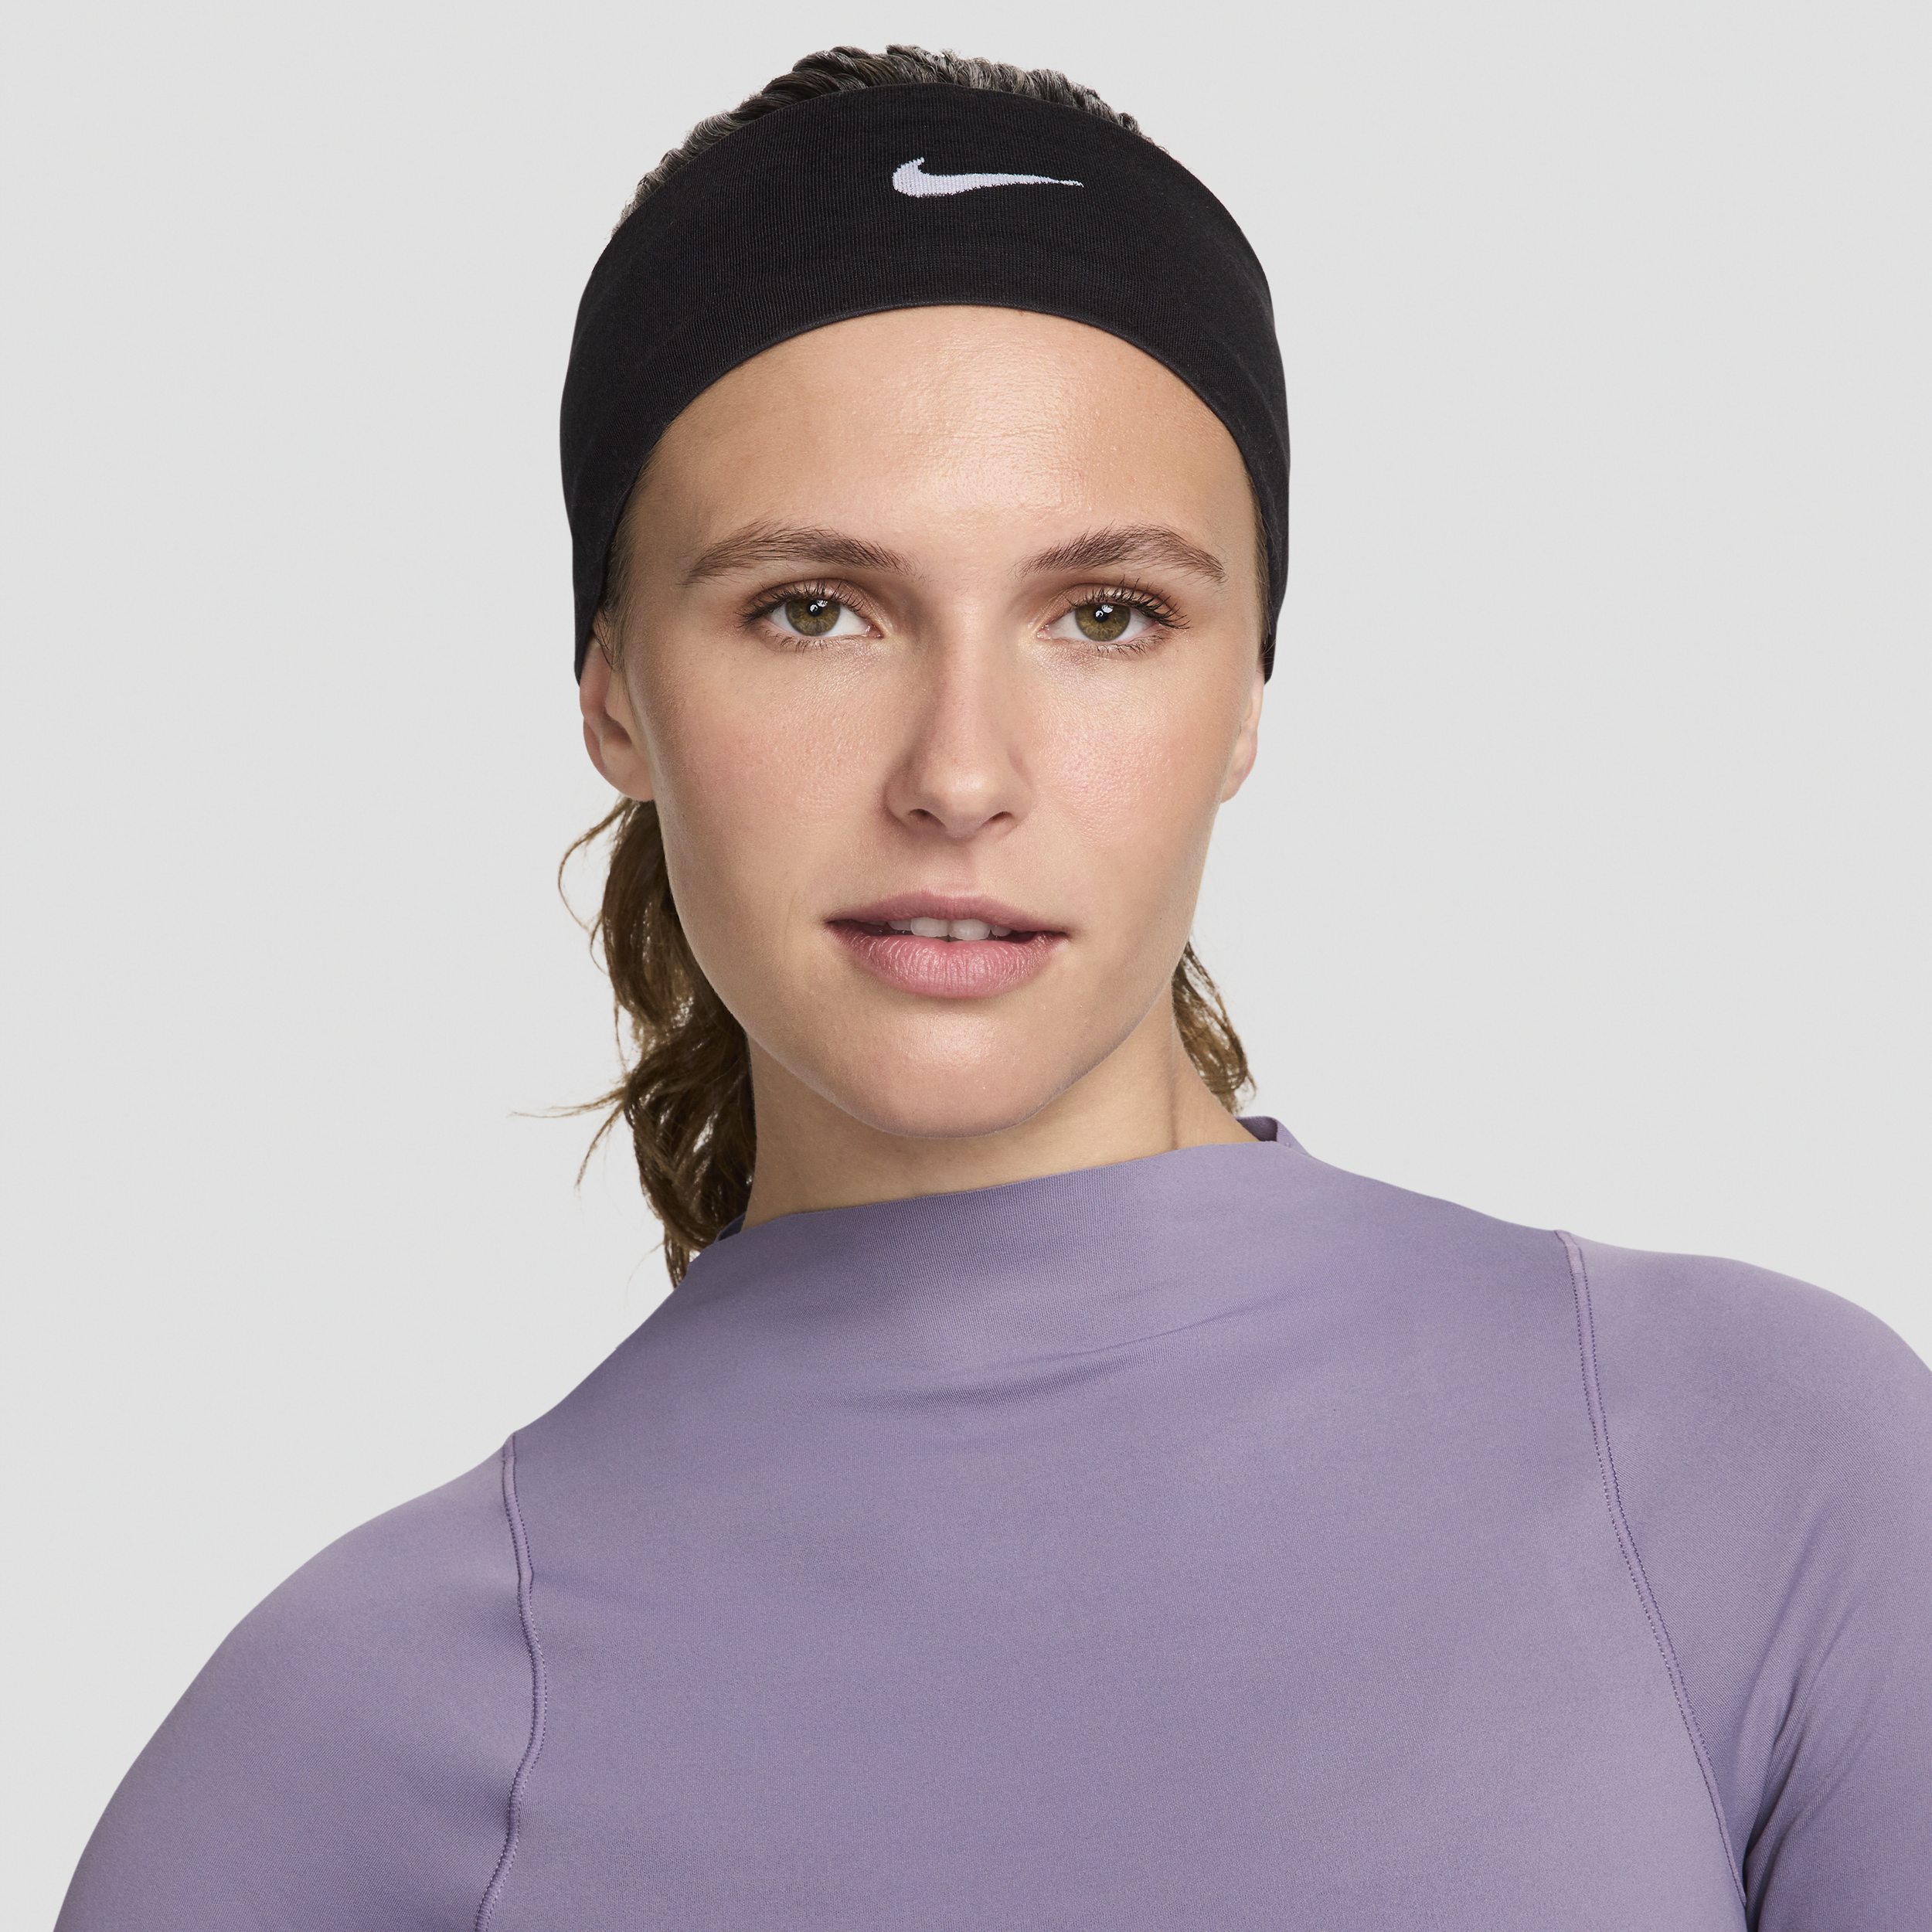 Nike Knit Headband In Black